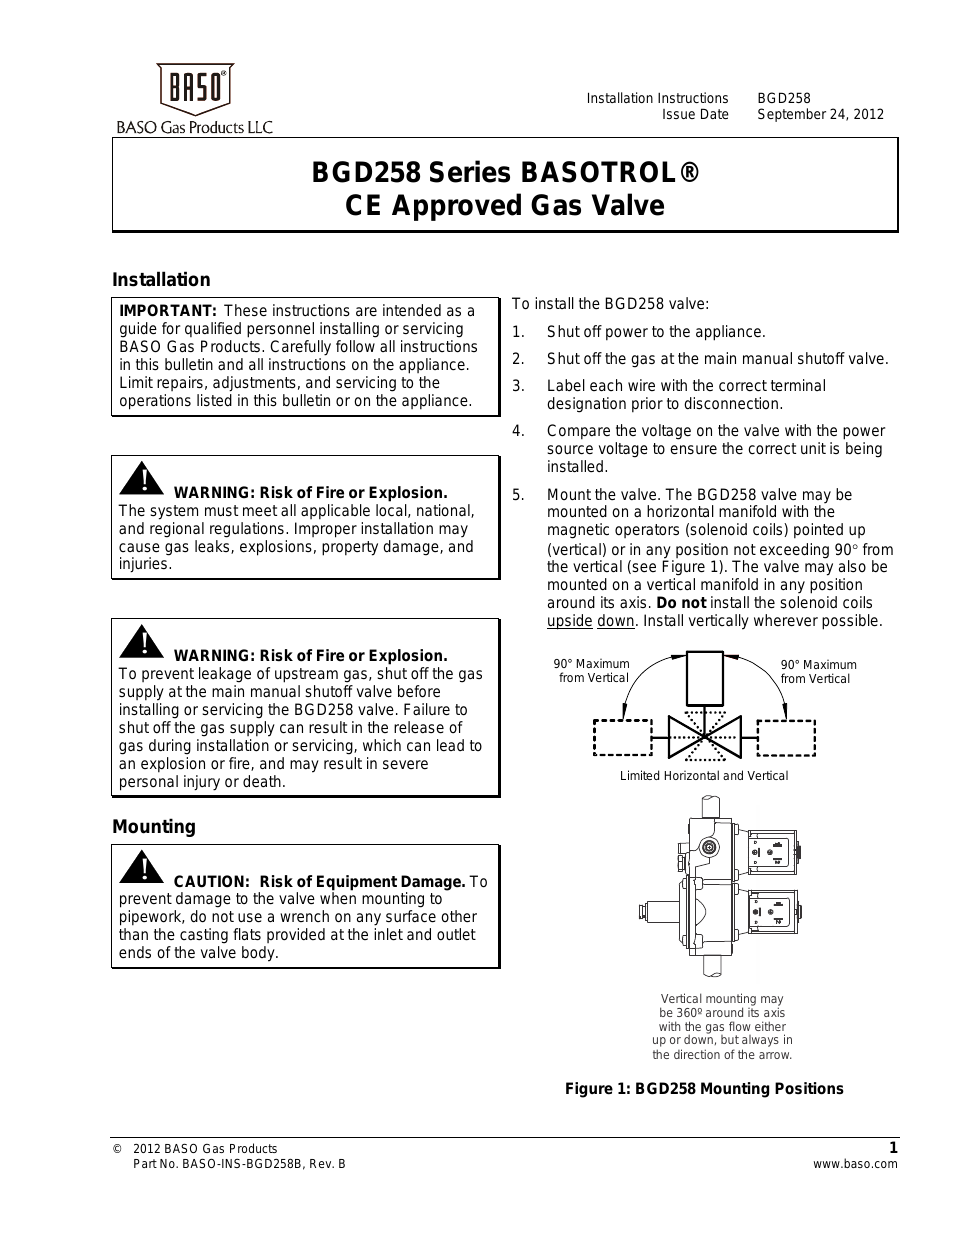 BGD258 Series BASOTROL CE Approved Gas Valve